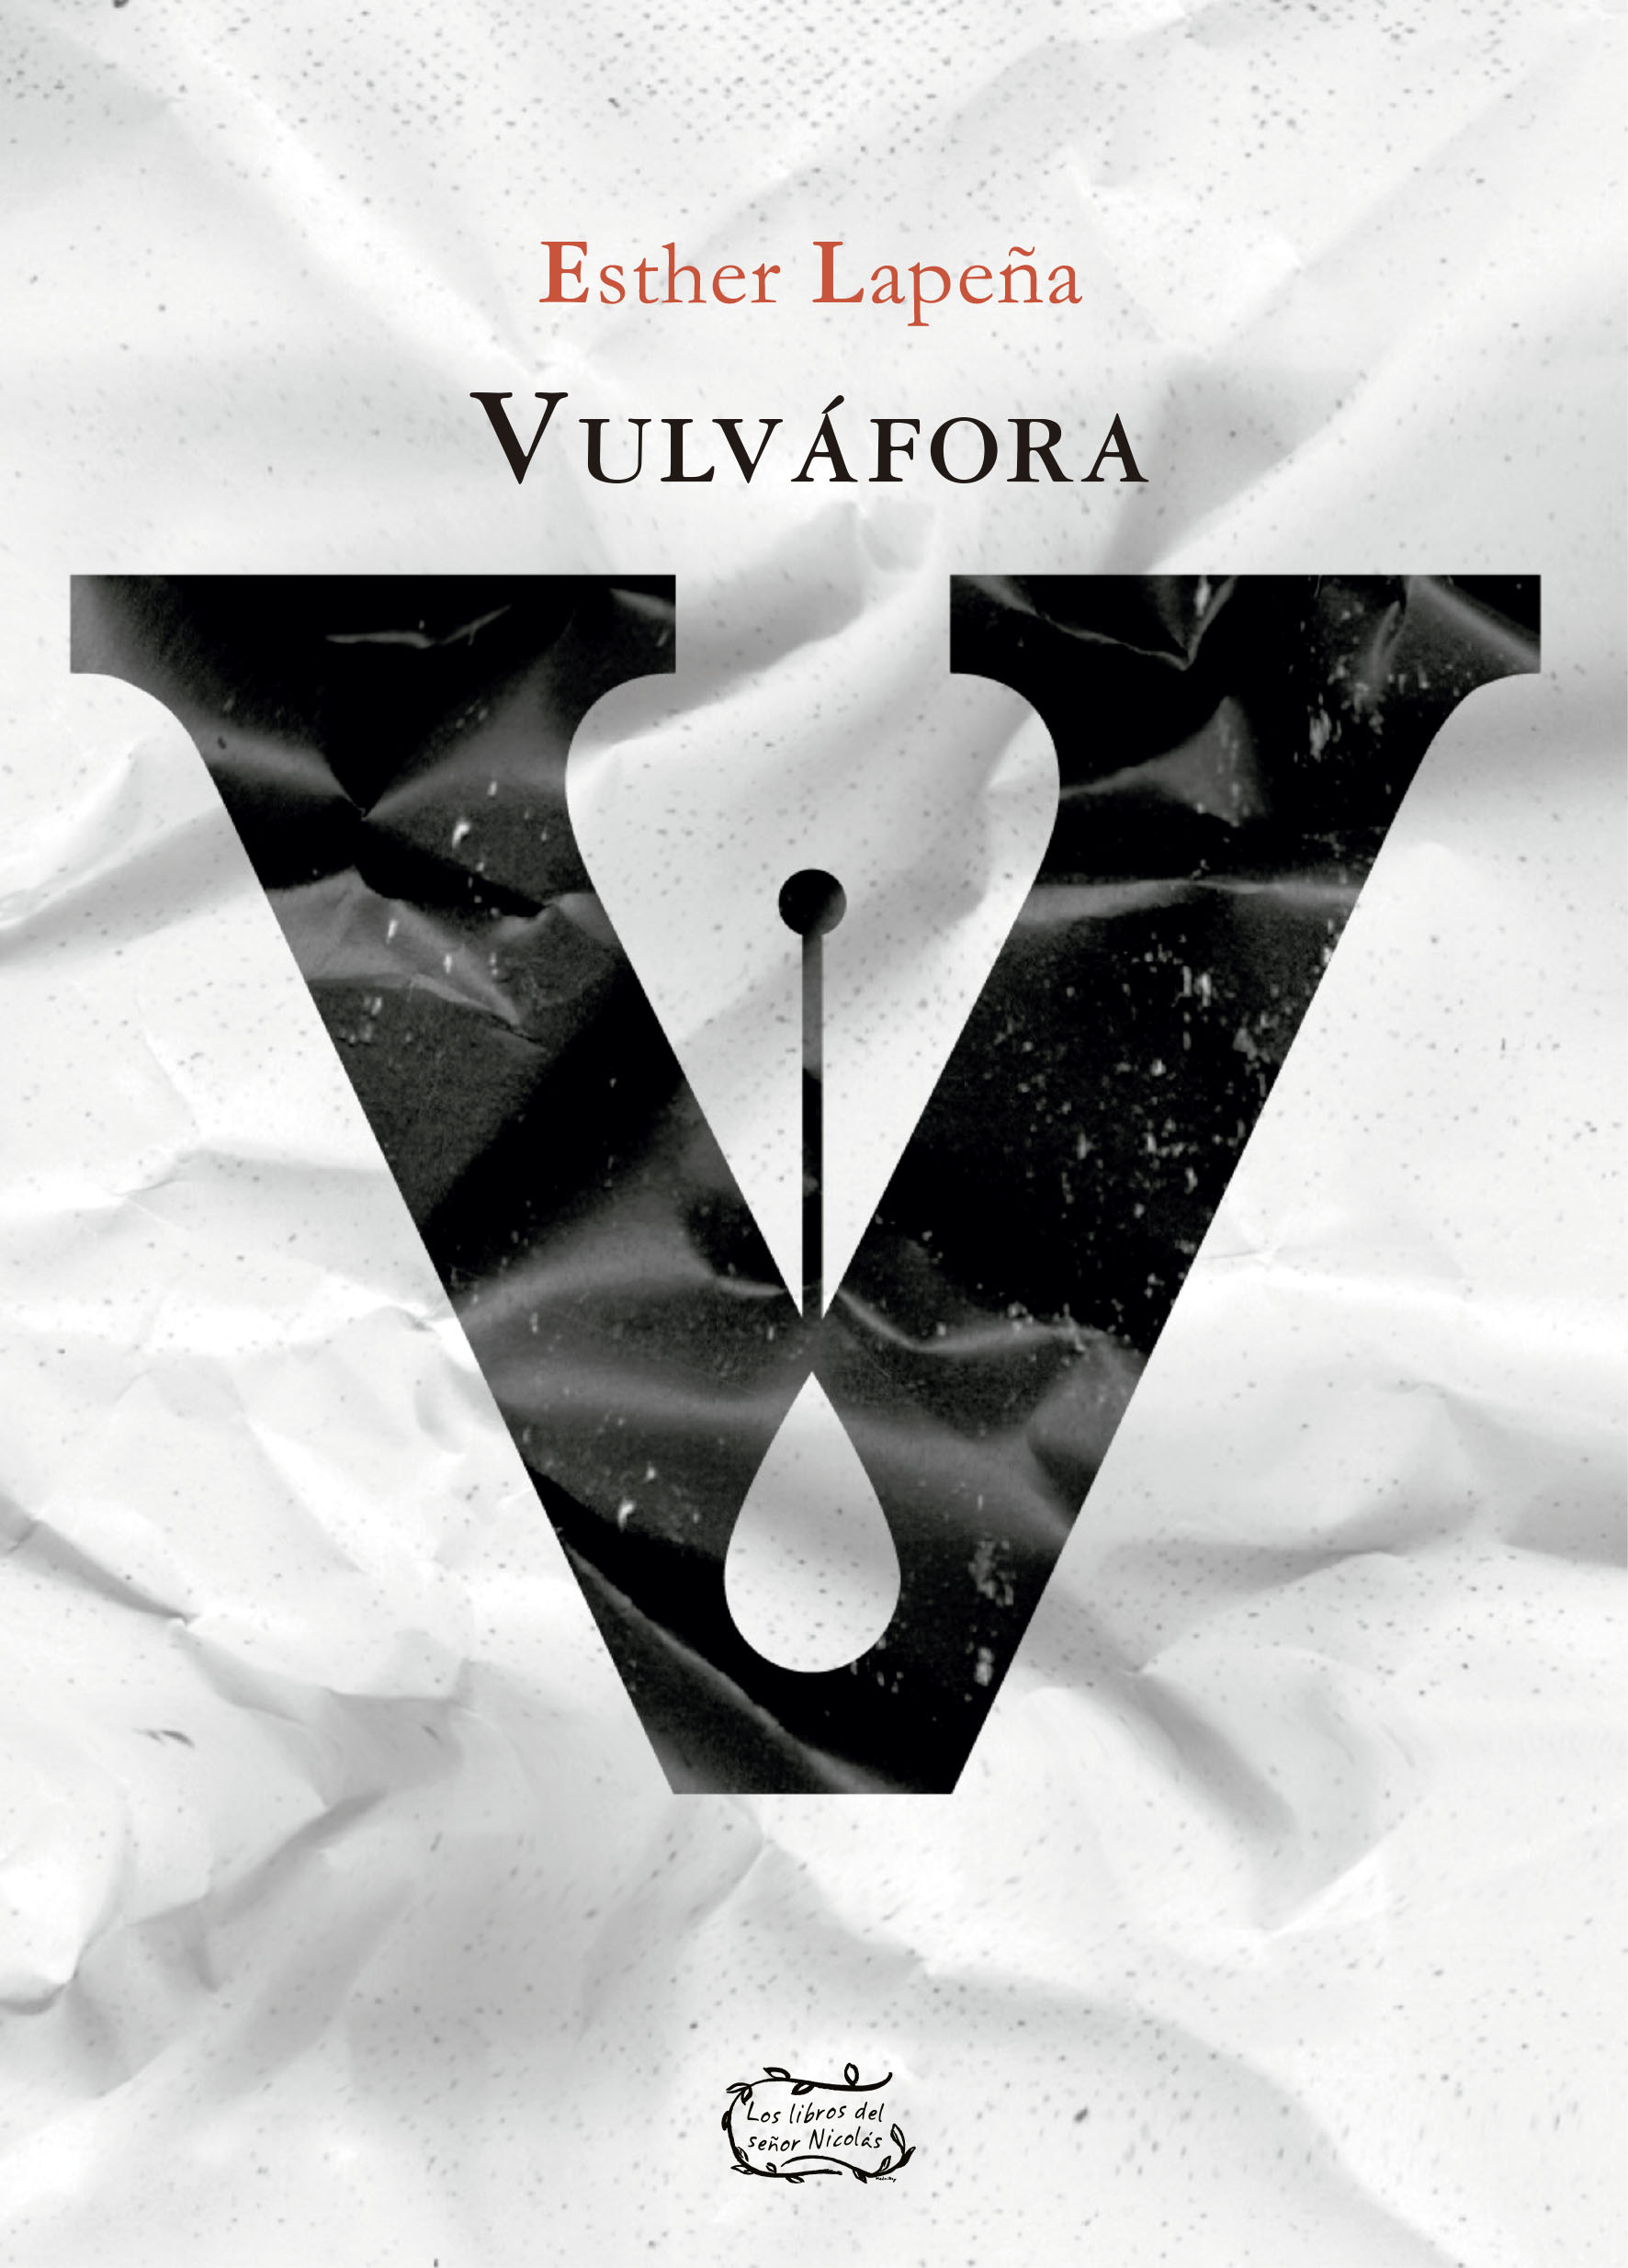 Enrique Villagrasa recomienda Vulváfora, de Esther Lapeña